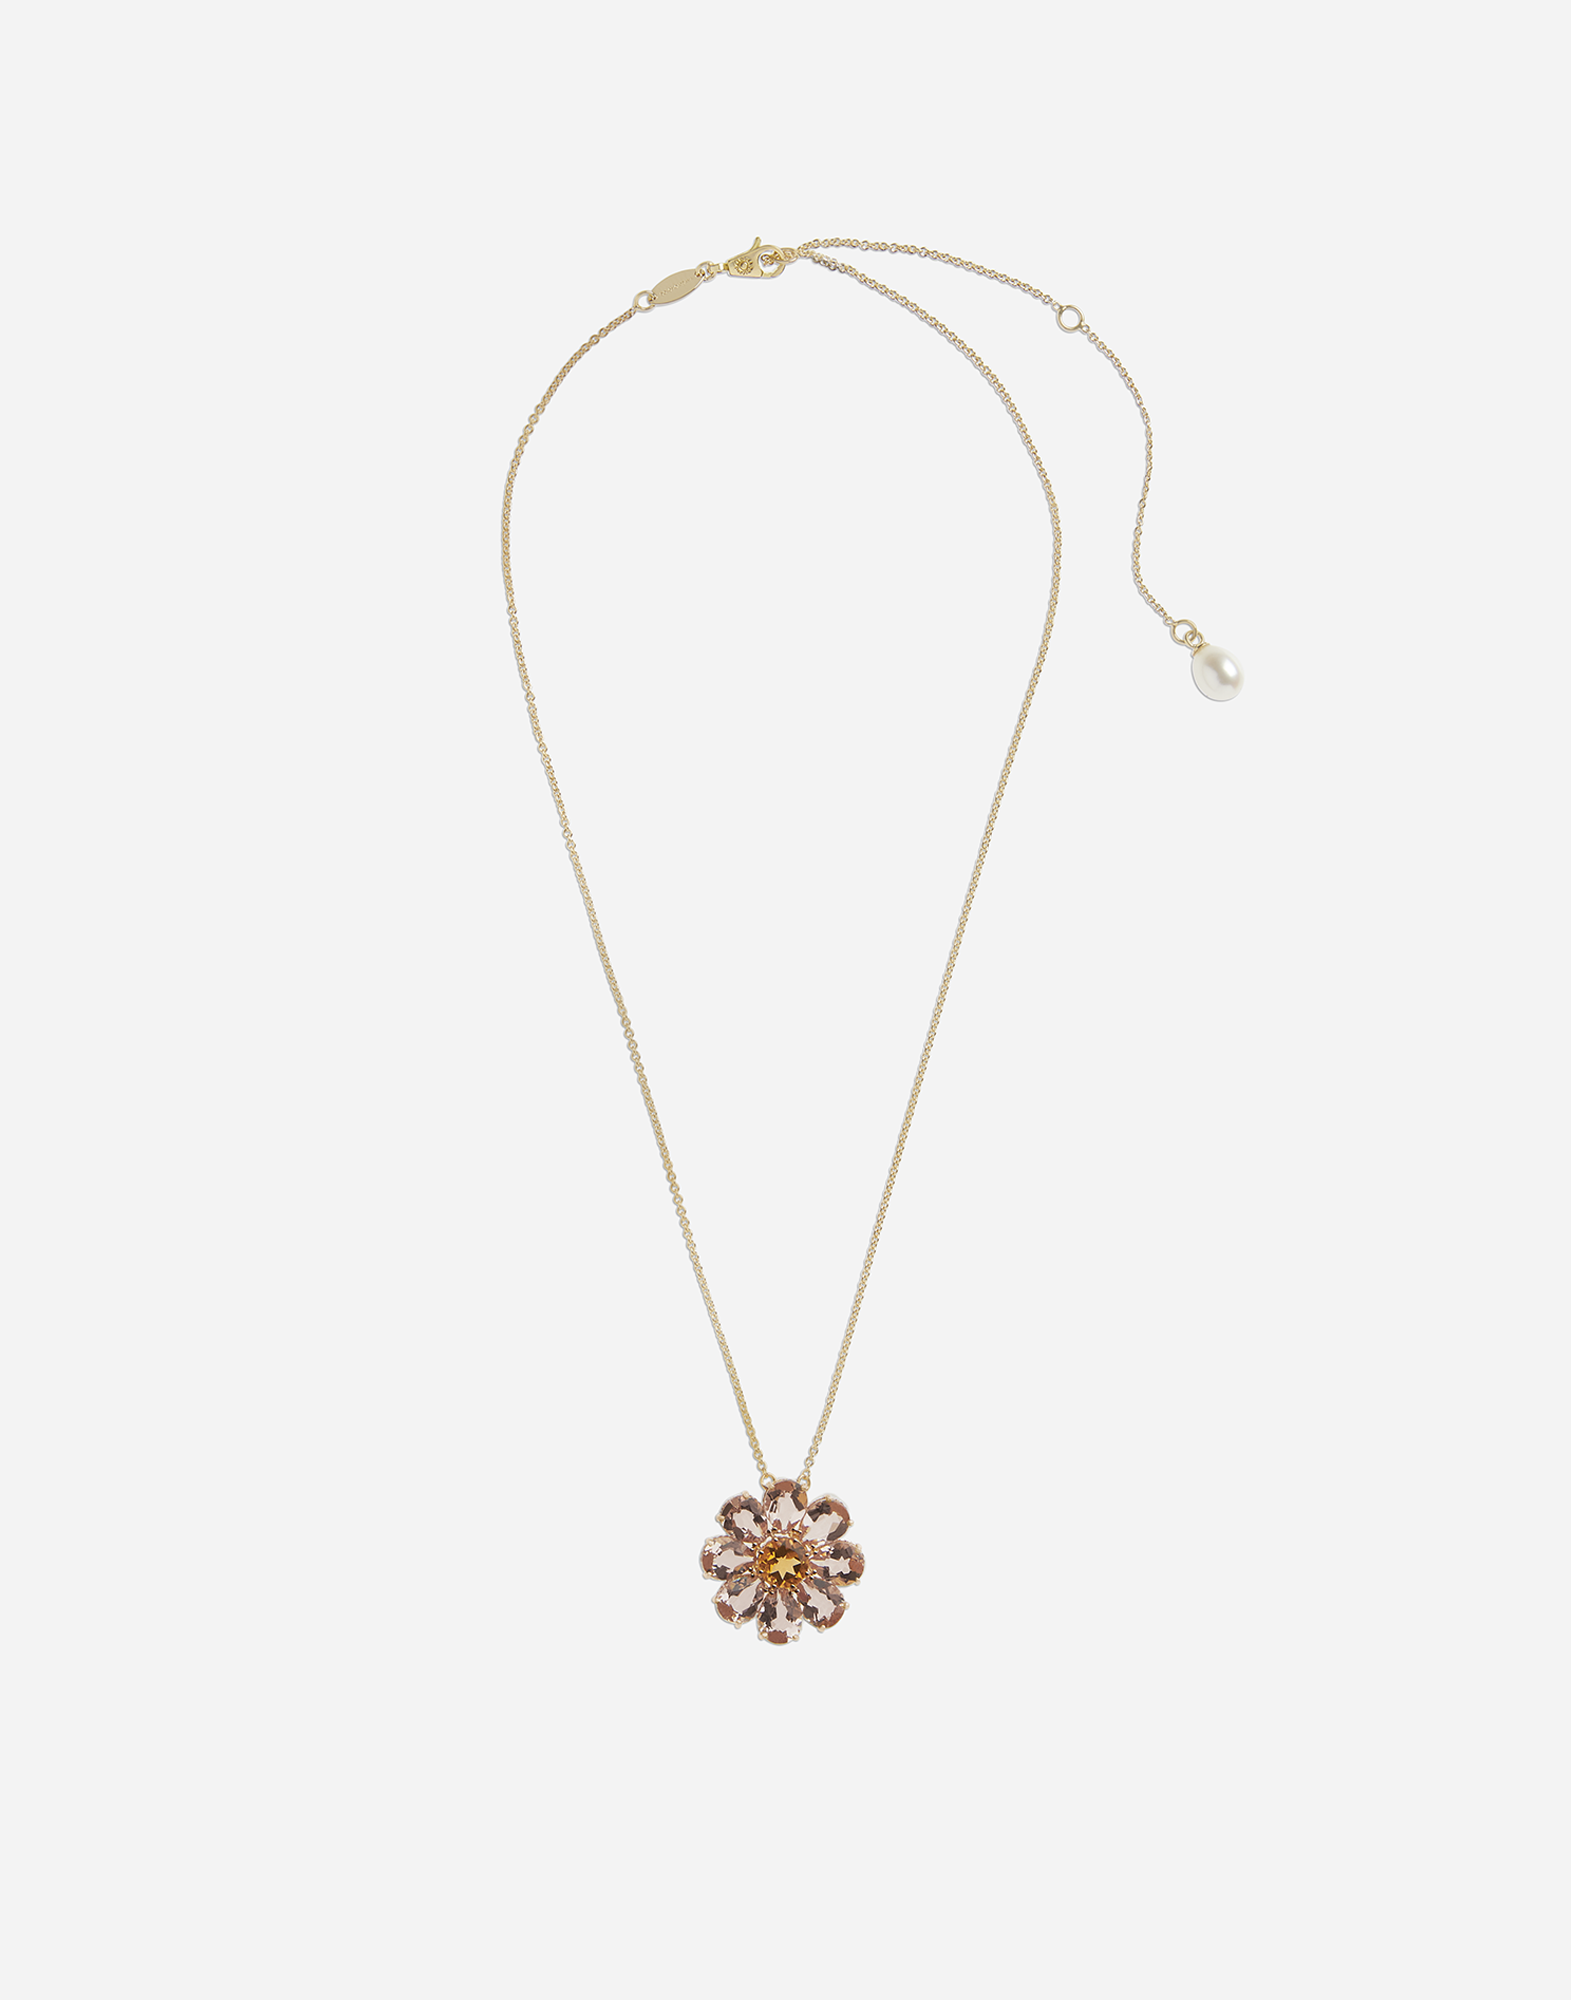 Dolce & Gabbana Necklace with red gold flower pendant Black WWJC2SXCMDT